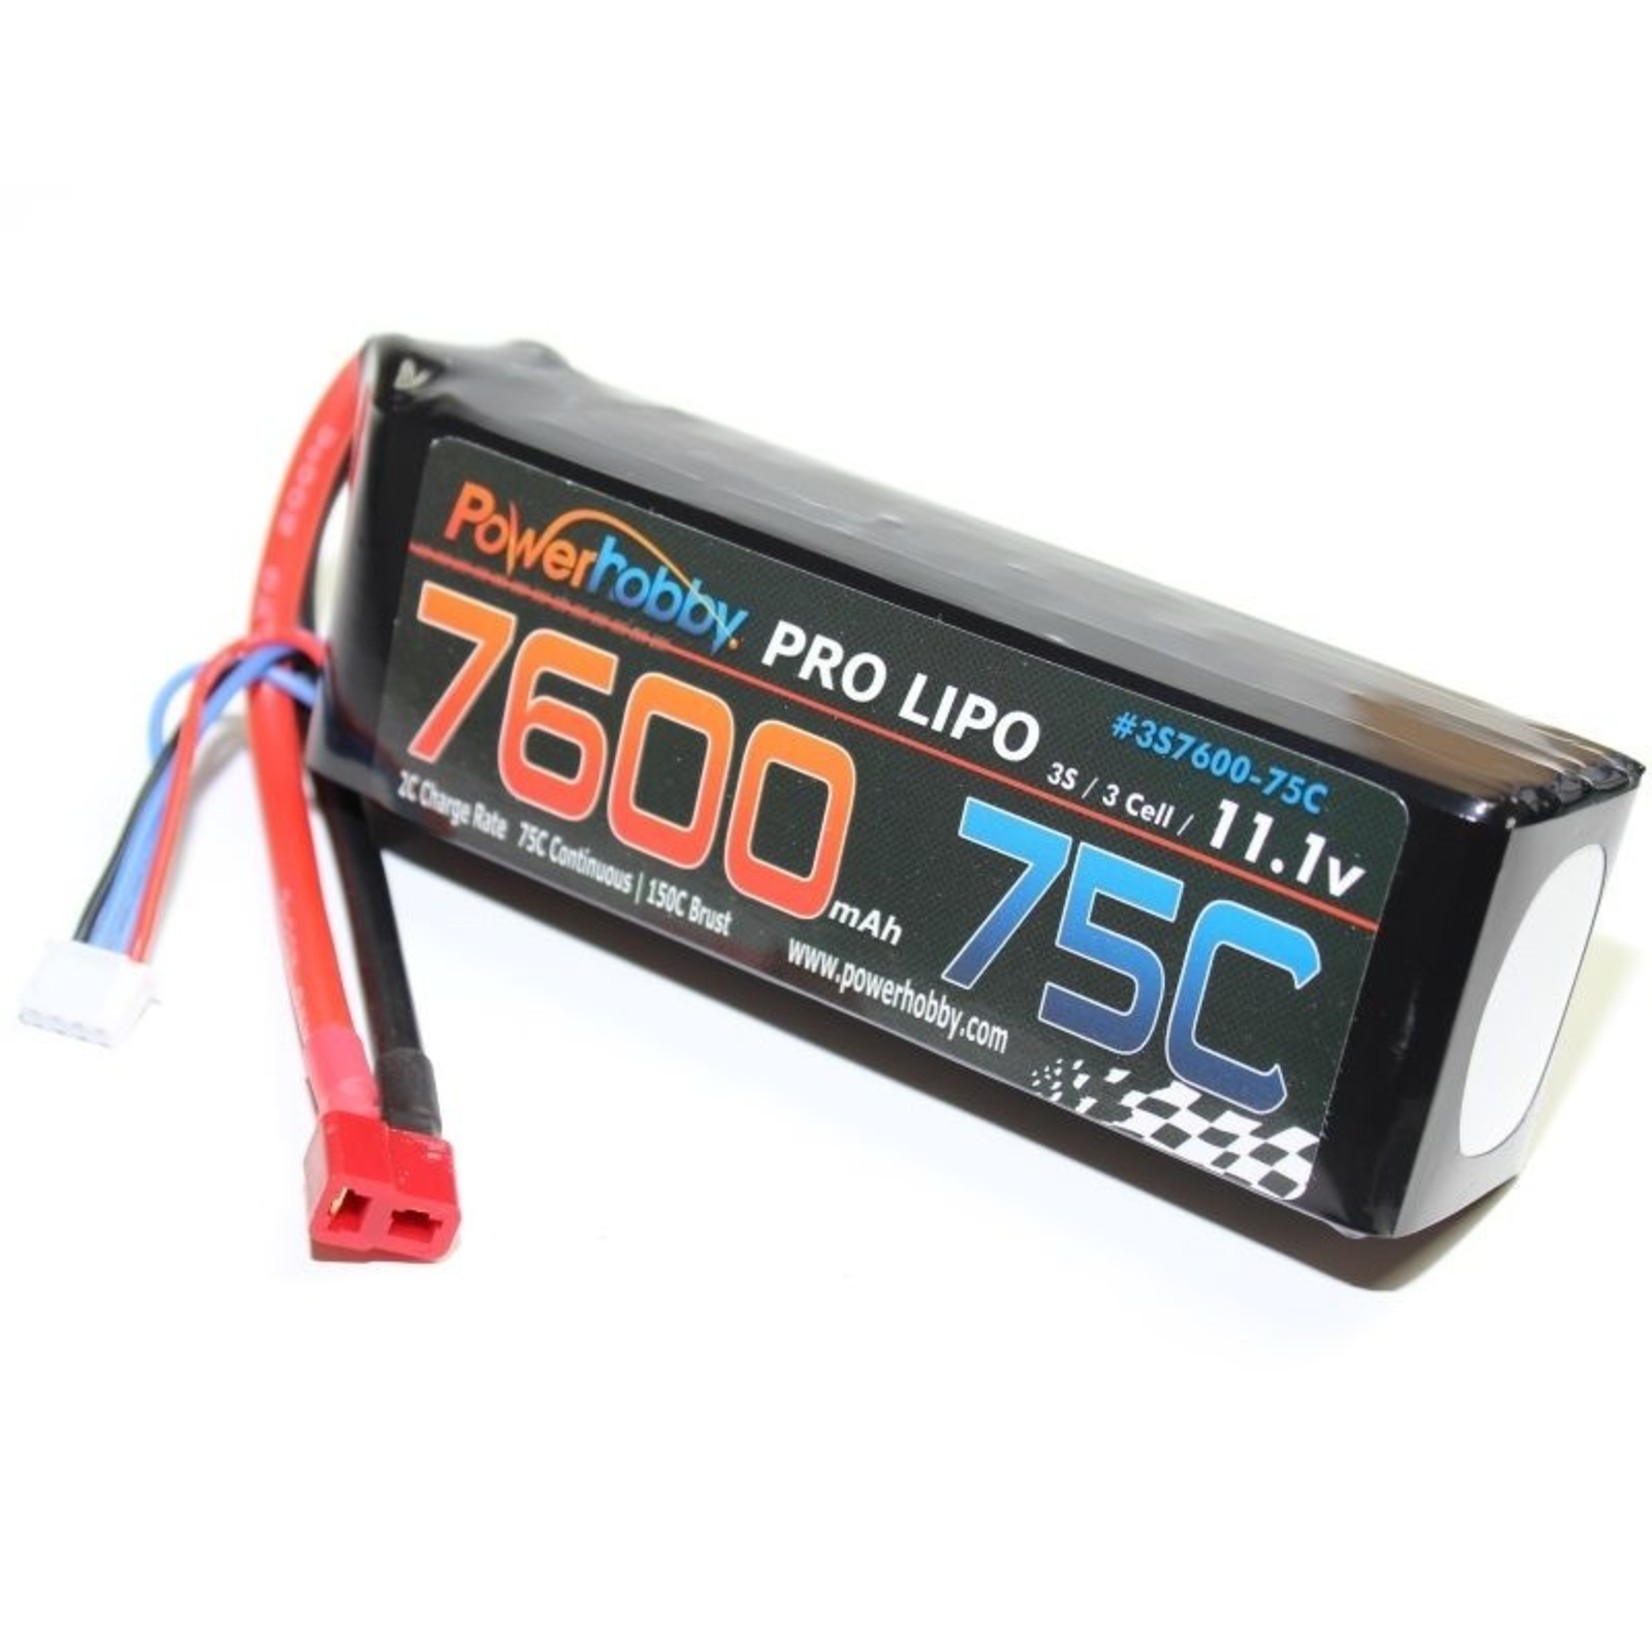 Power Hobby 7600mAh 11.1V 3S 75C LiPo Battery with Hardwired T-Plug